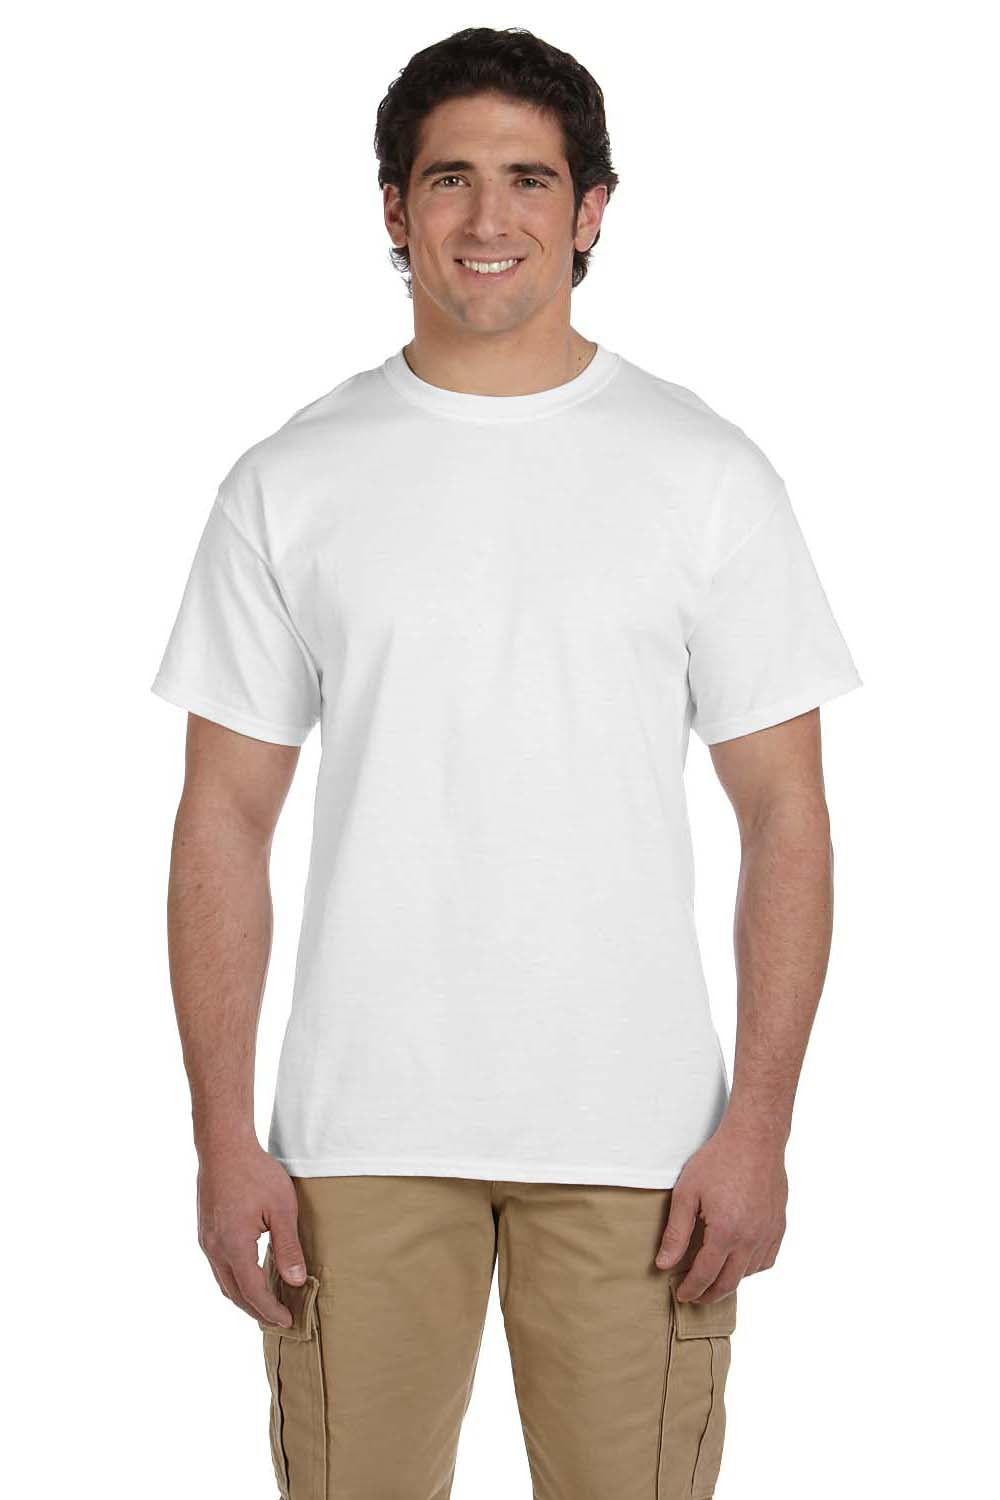 Hanes 5170 Mens EcoSmart Short Sleeve Crewneck T-Shirt White Front